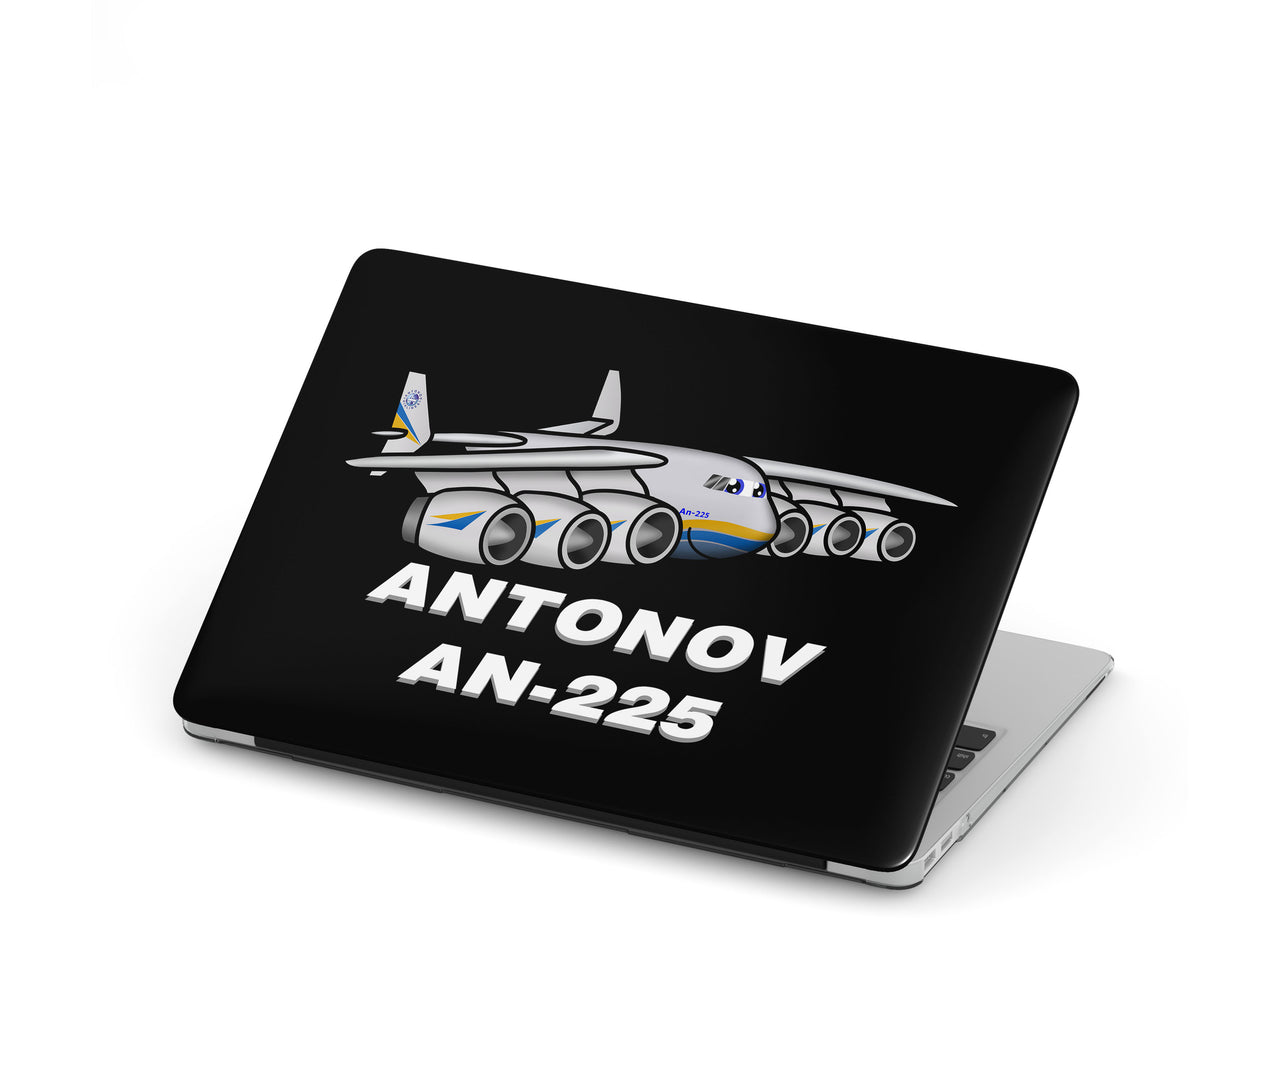 Antonov AN-225 (25) Designed Macbook Cases